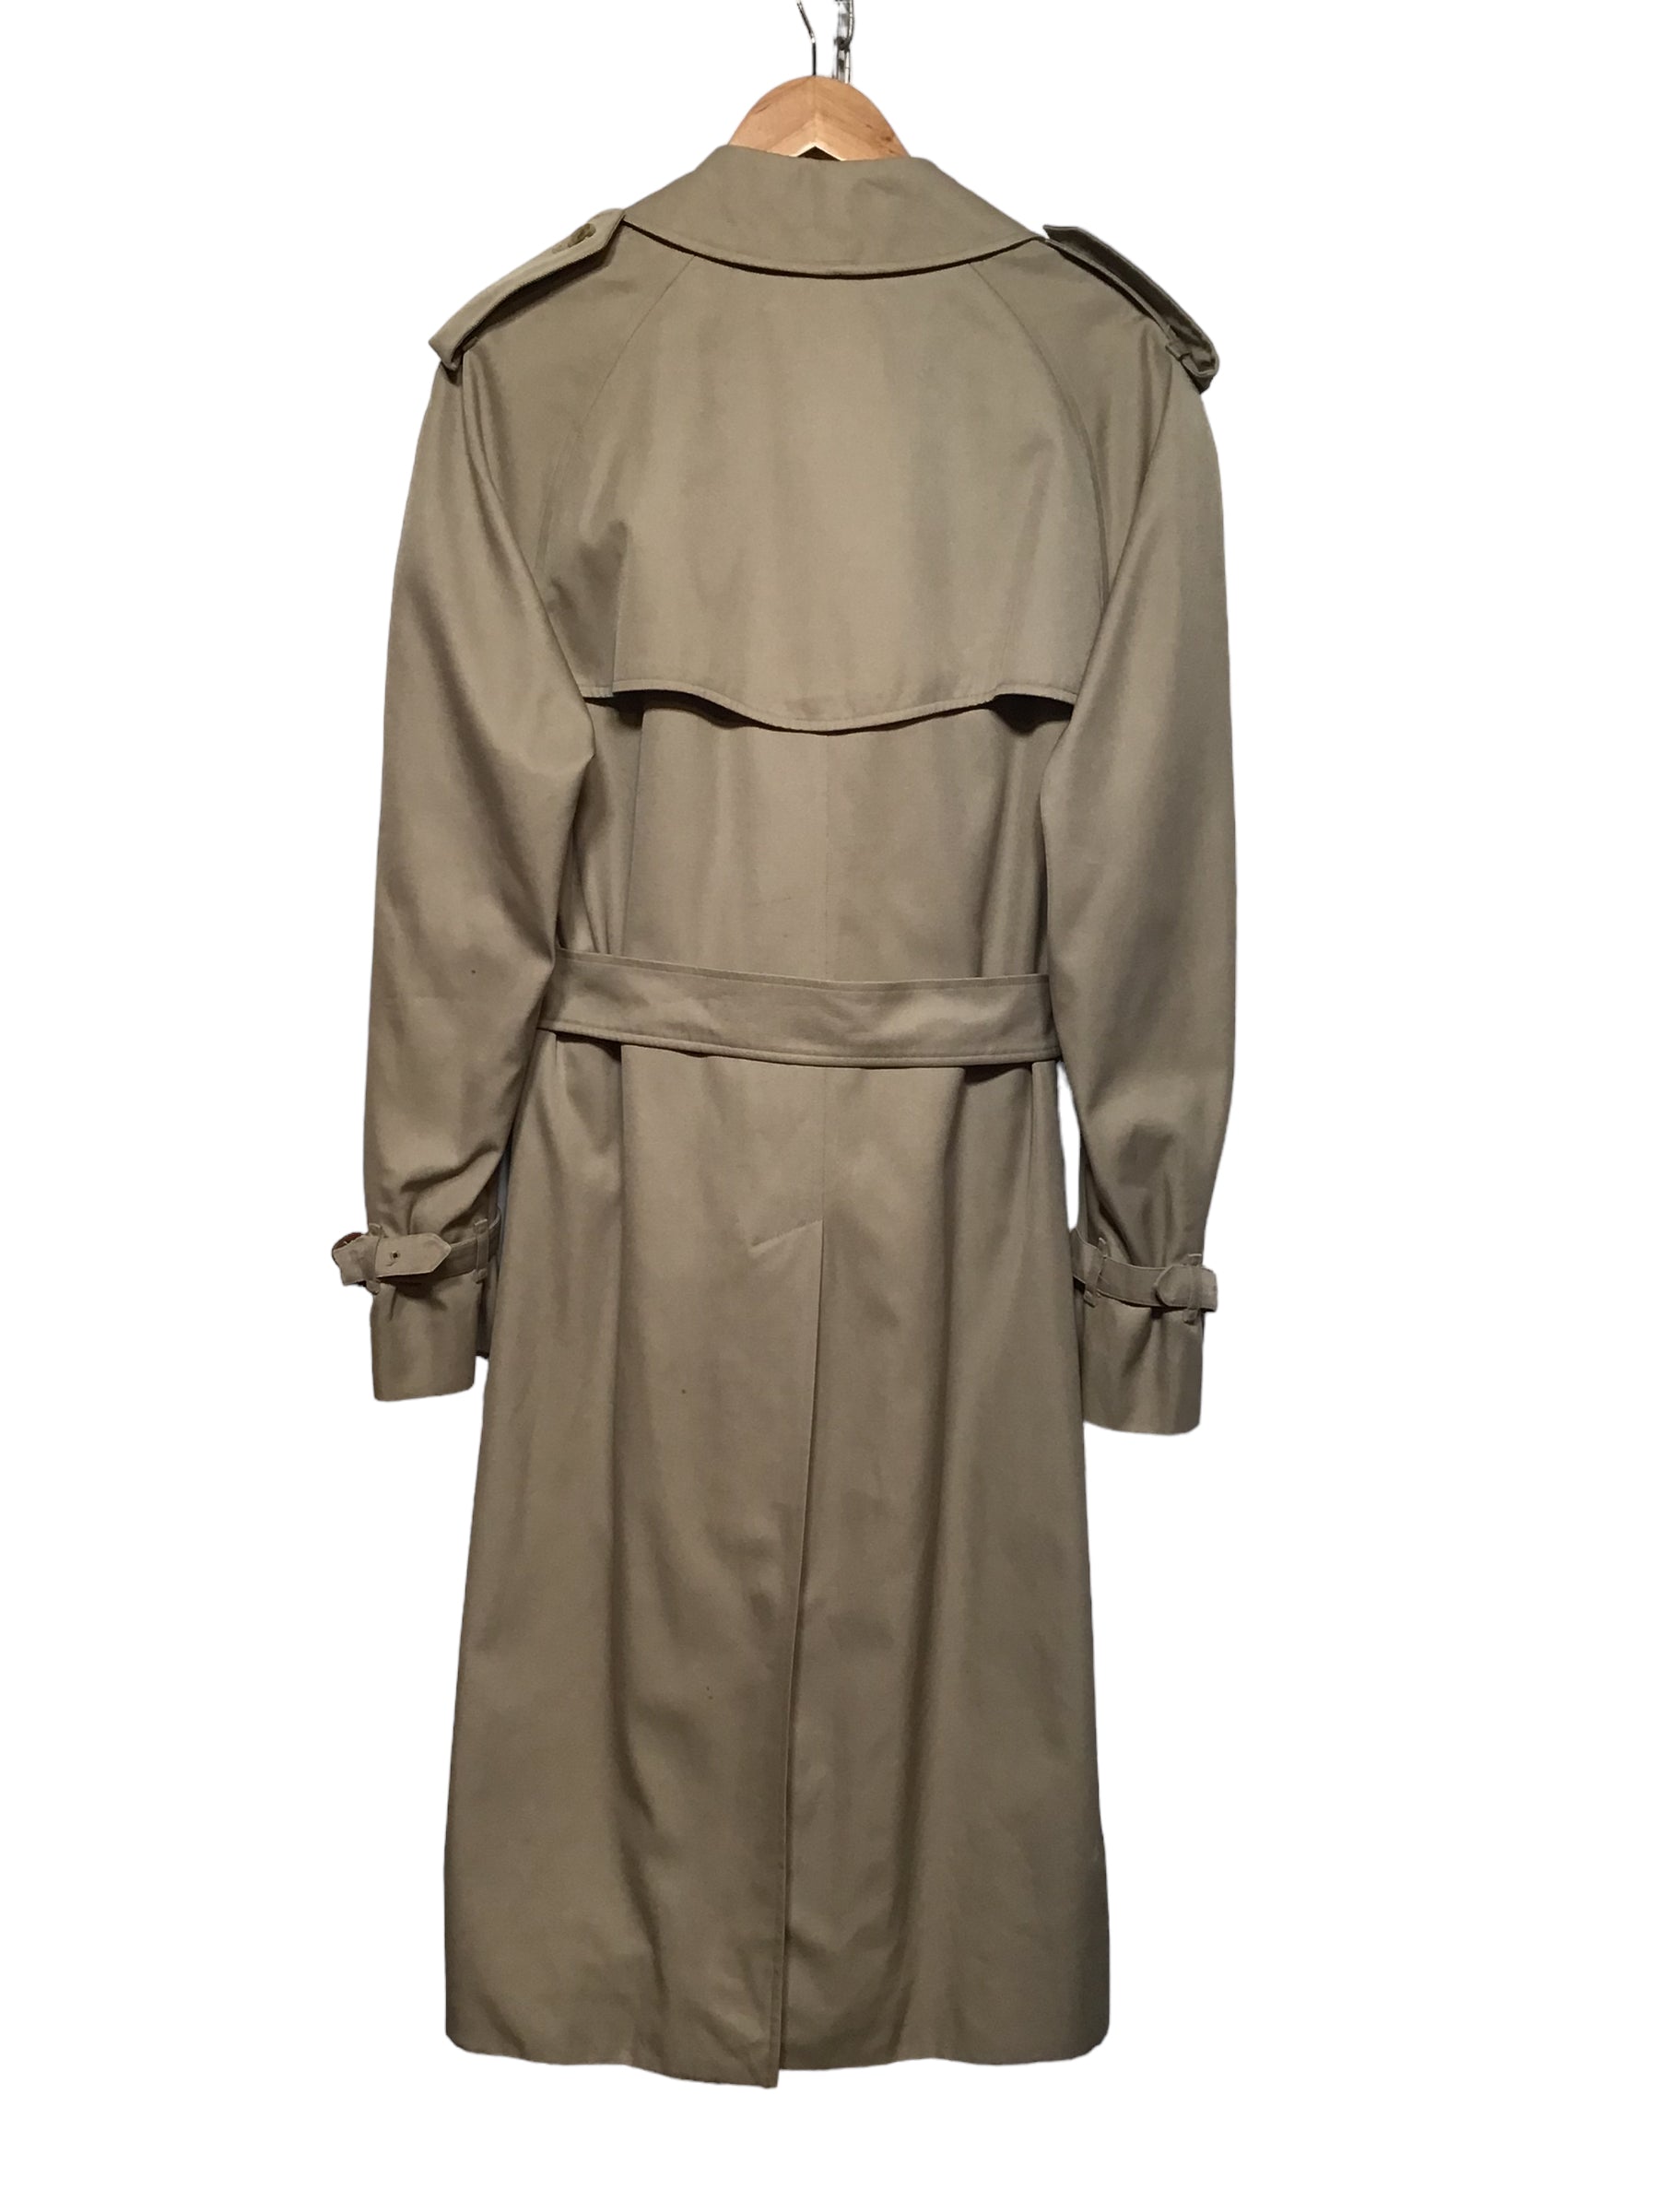 Burberry Trench Coat (Size XL) – Loft 68 Vintage